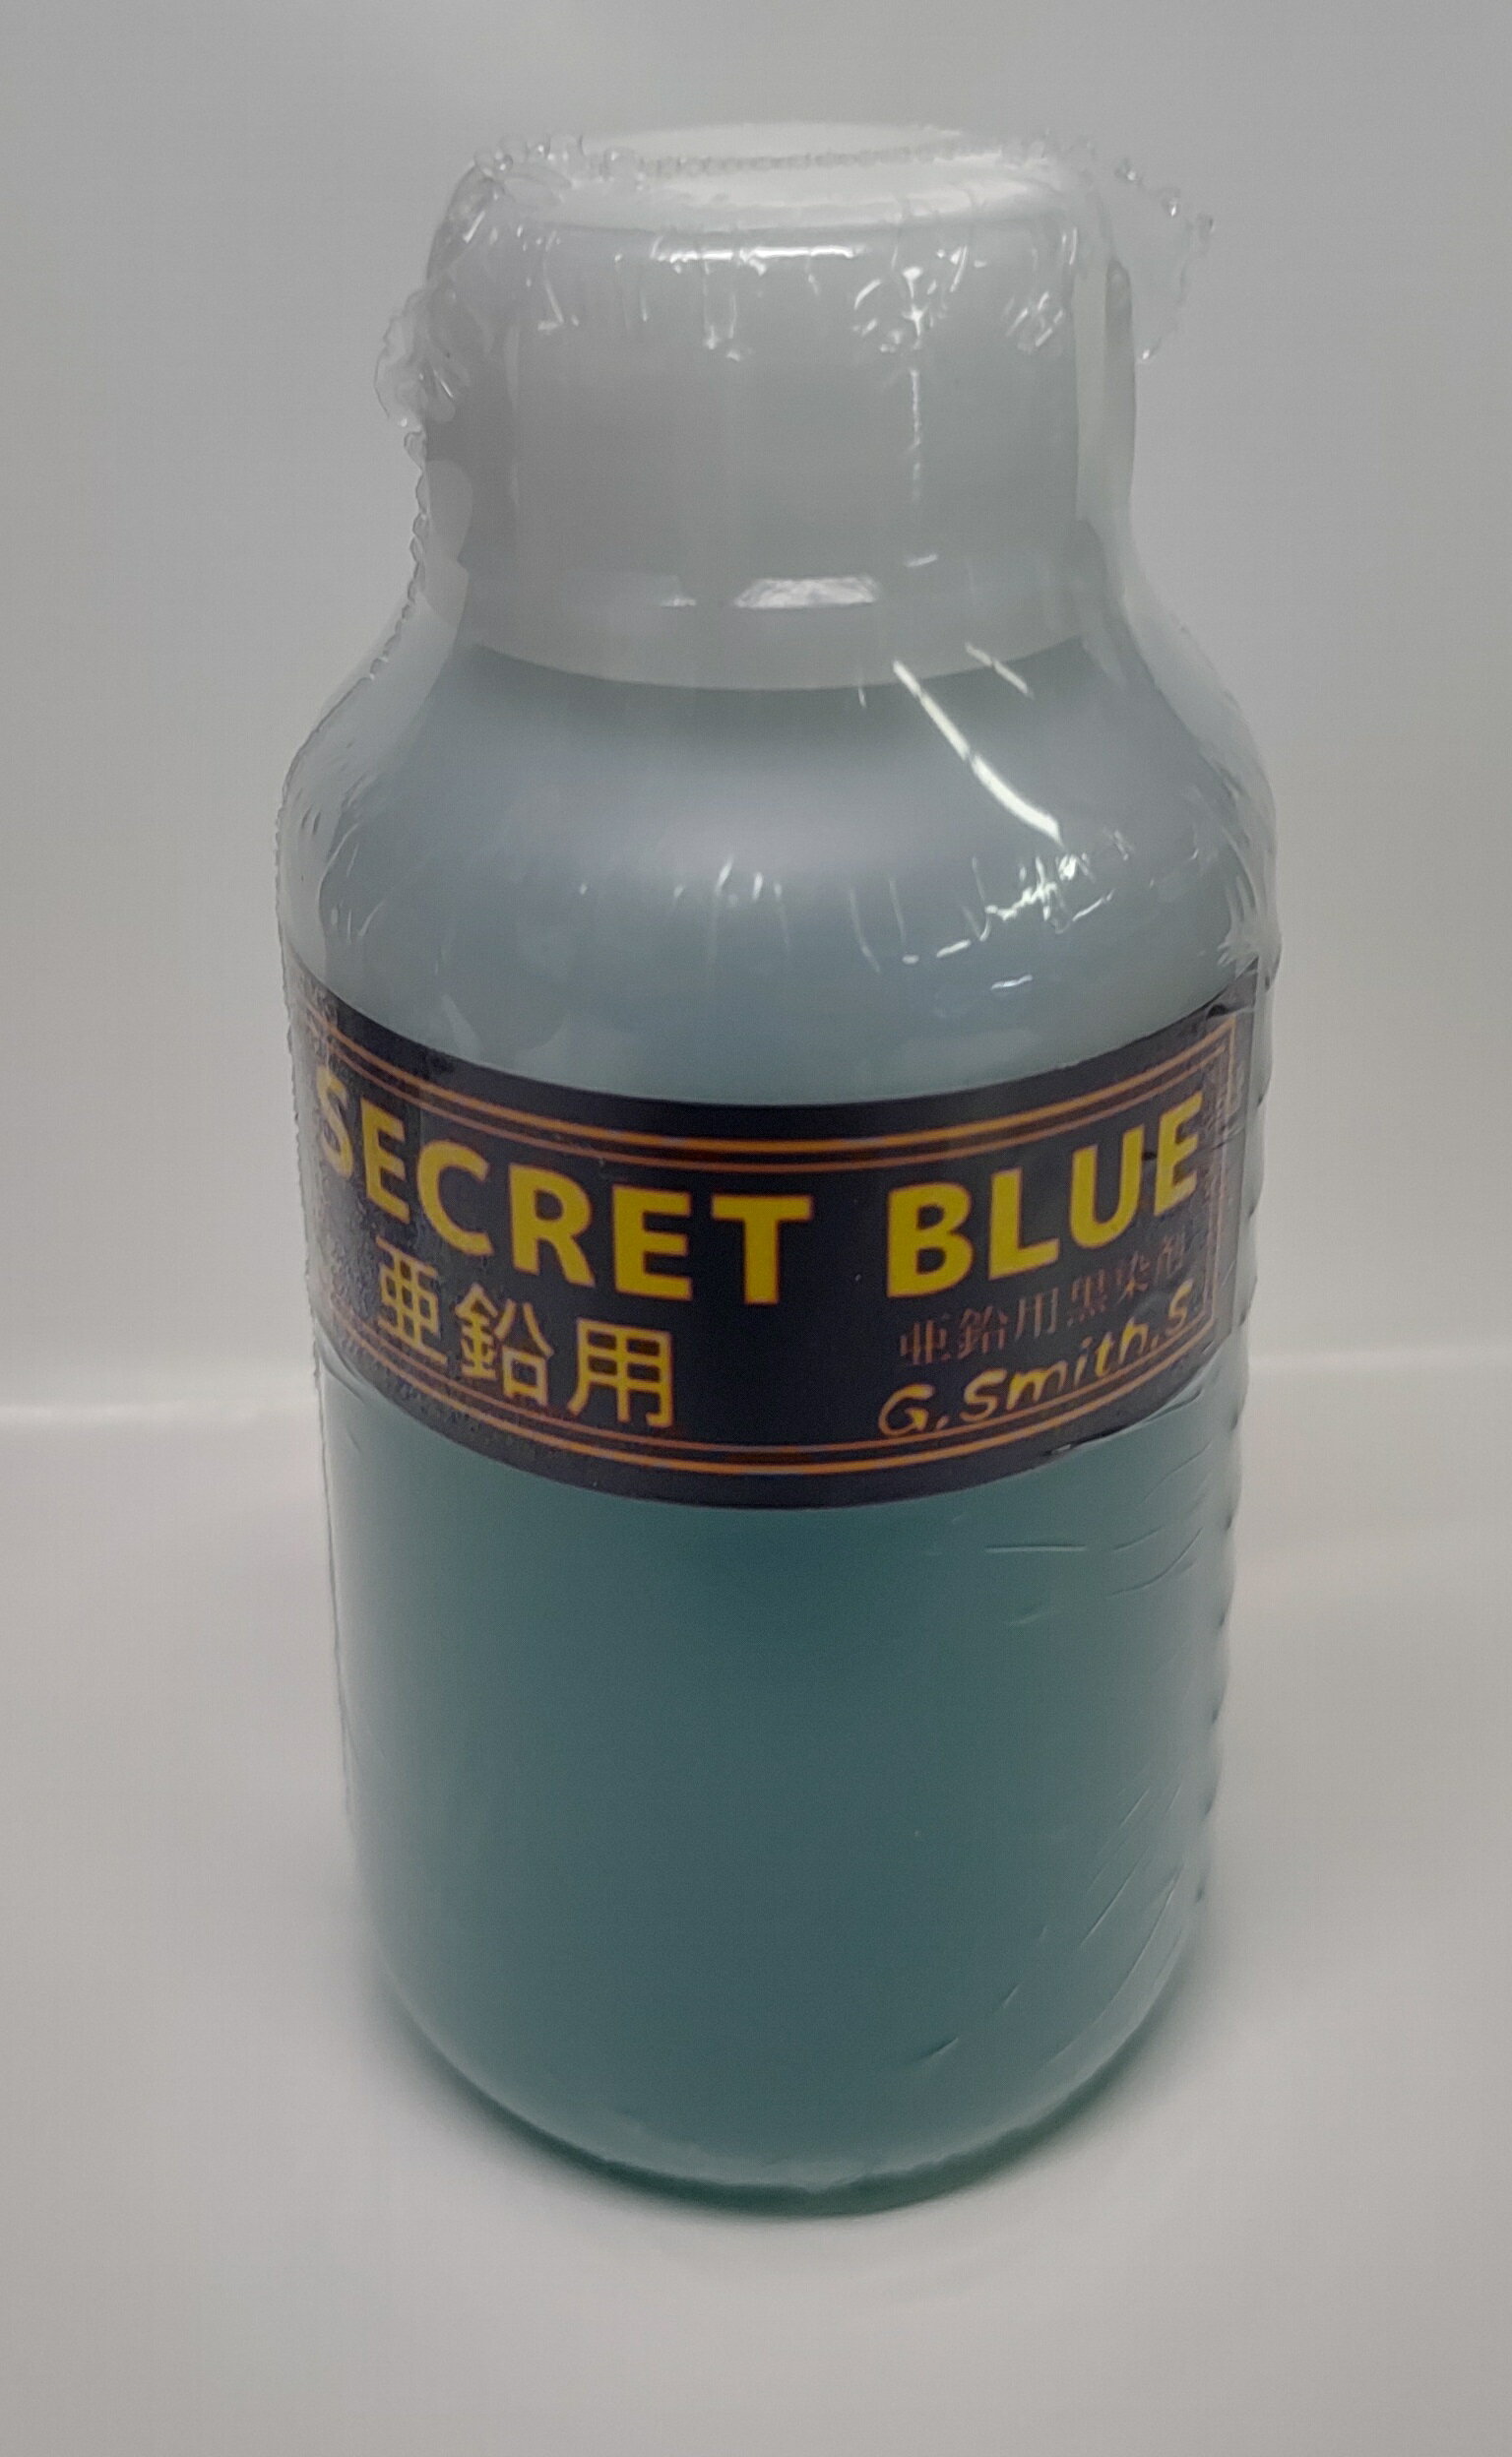 G.スミス.S SECRET BLUE 亜鉛用 黒染め液 3000